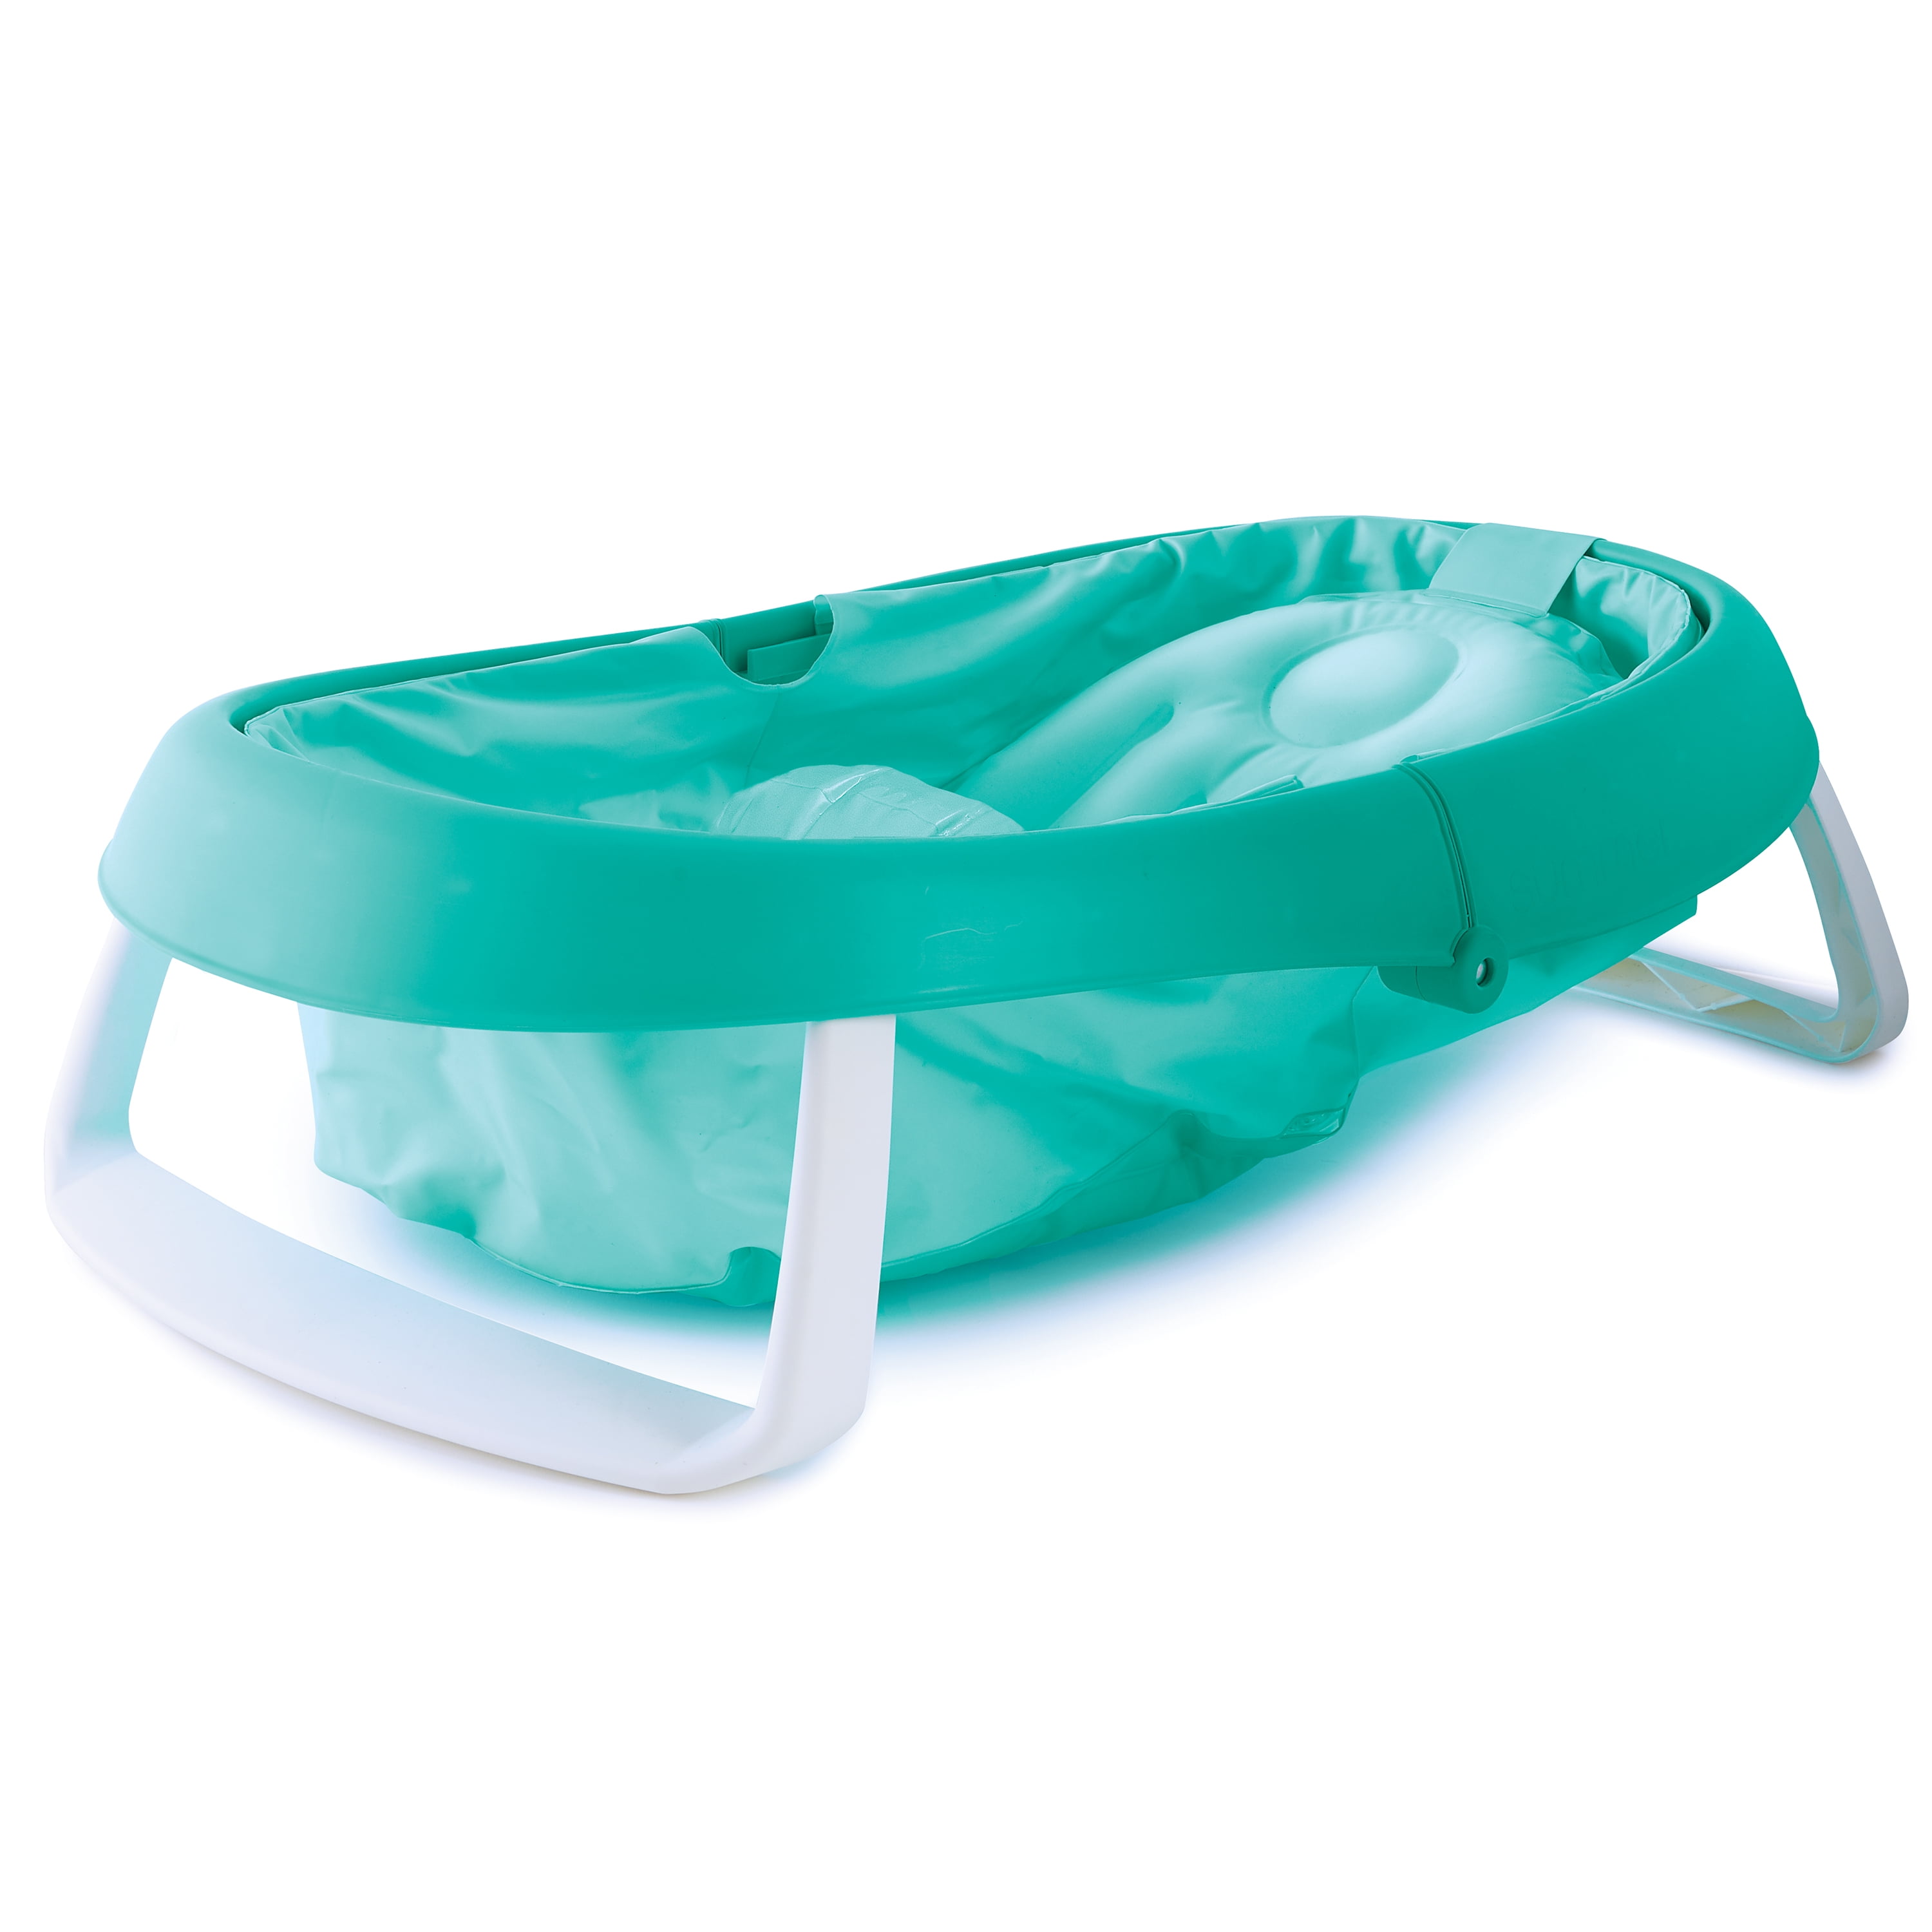 Summer Infant Inflatable Folding Bath Tub - Walmart.com - Walmart.com